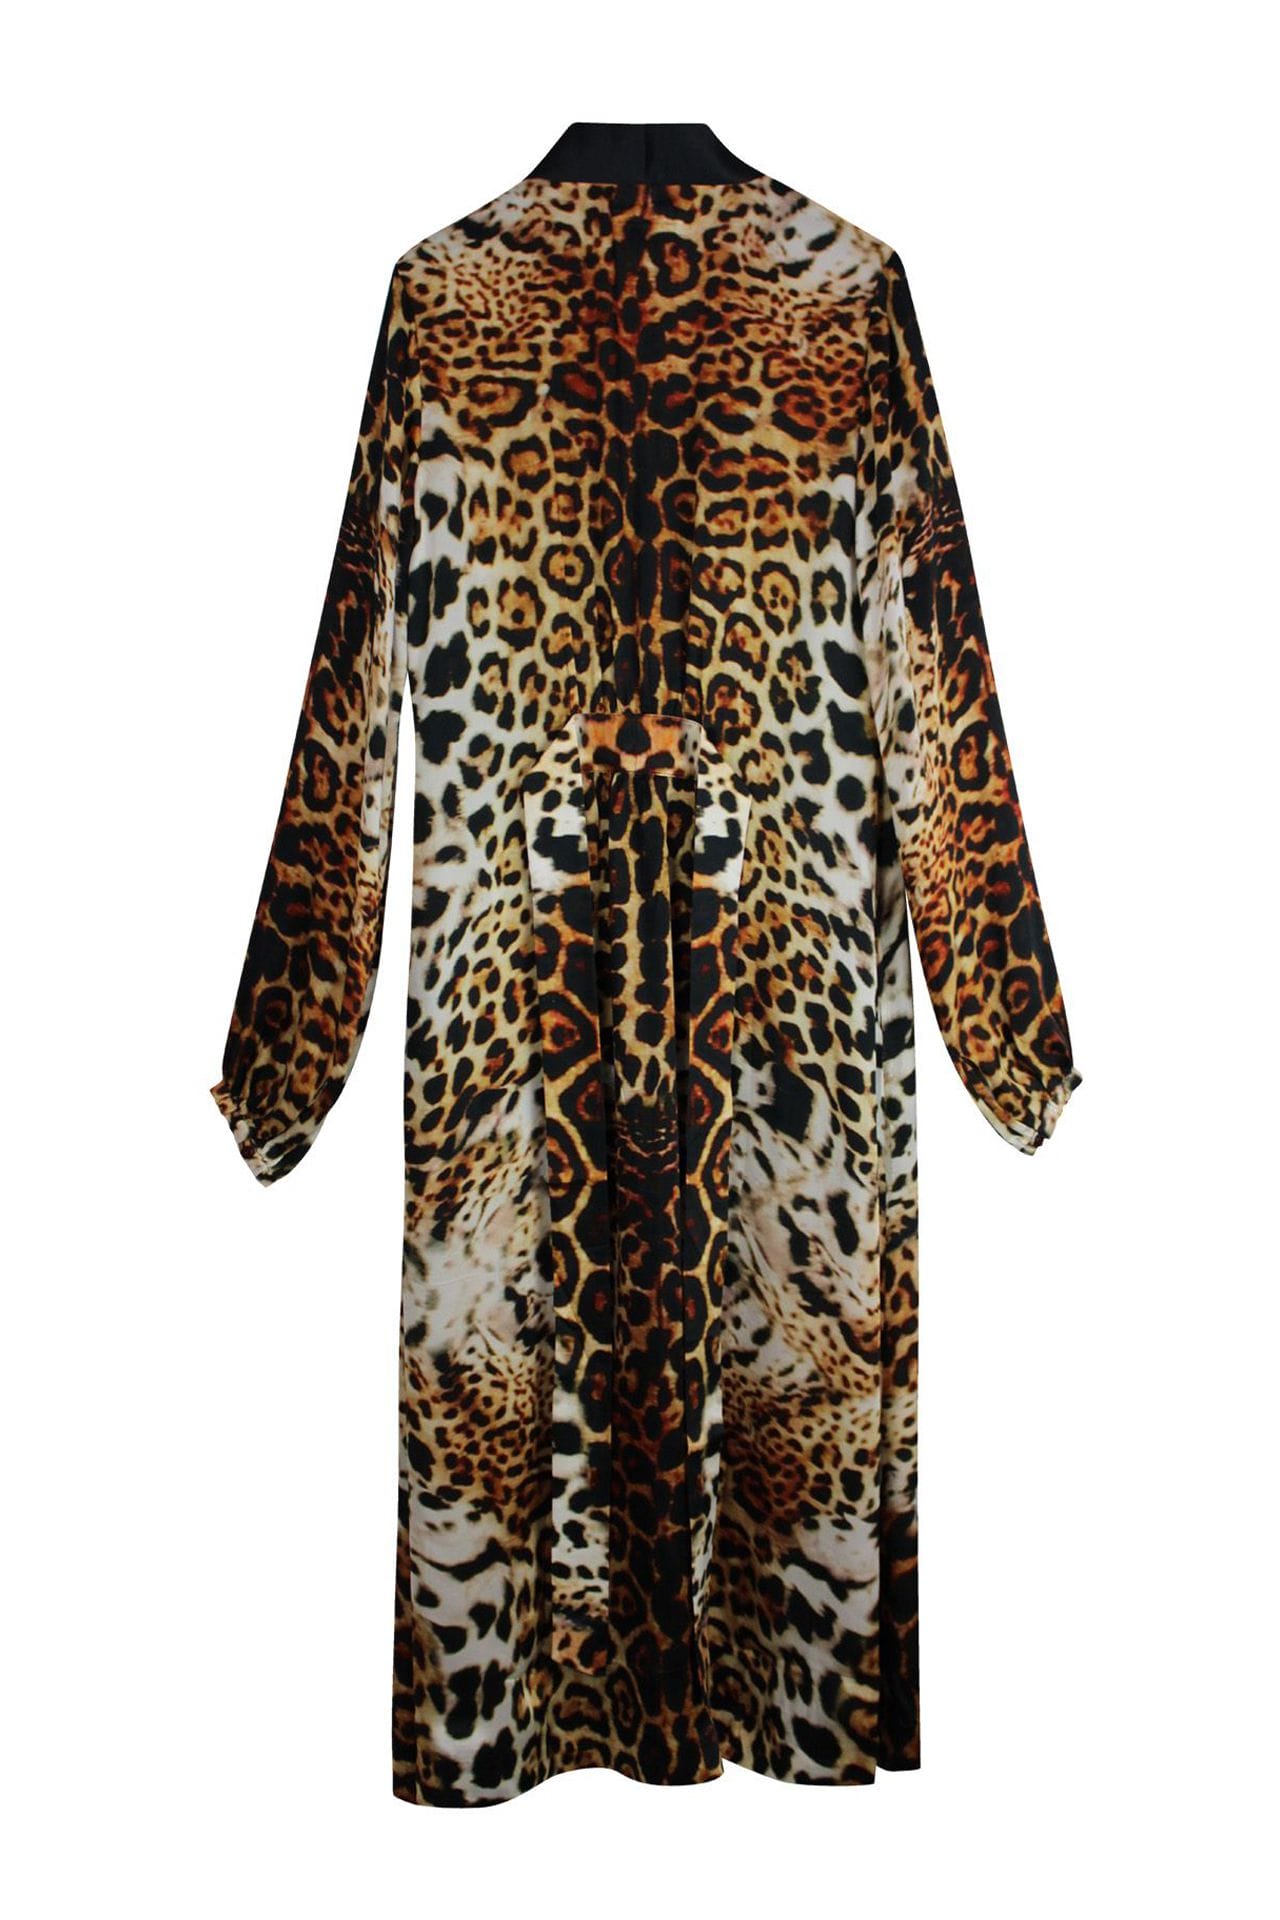 "Kyle X Shahida" "womens leopard robe" "beautiful kimono"  "plus size long kimono" "long kimono robe womens" "sexy silk robe"